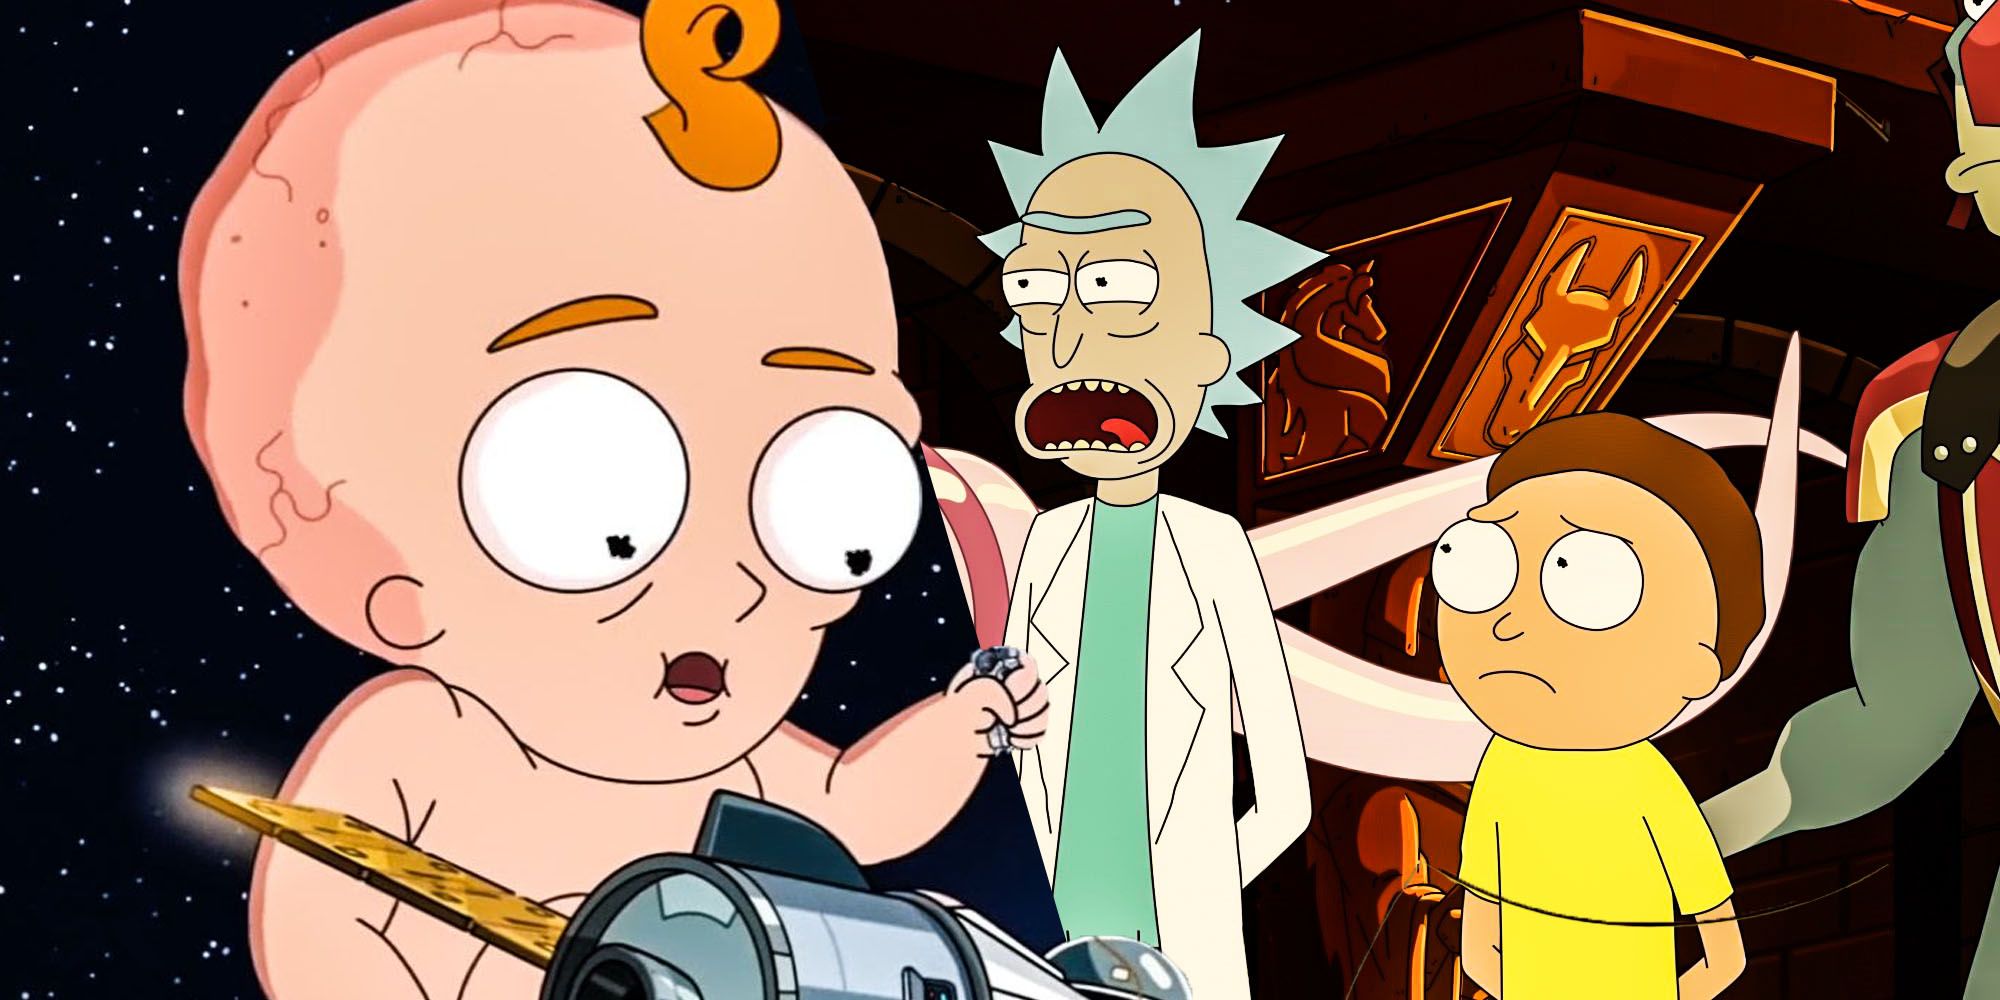 Rick and morty season 5 episode 4